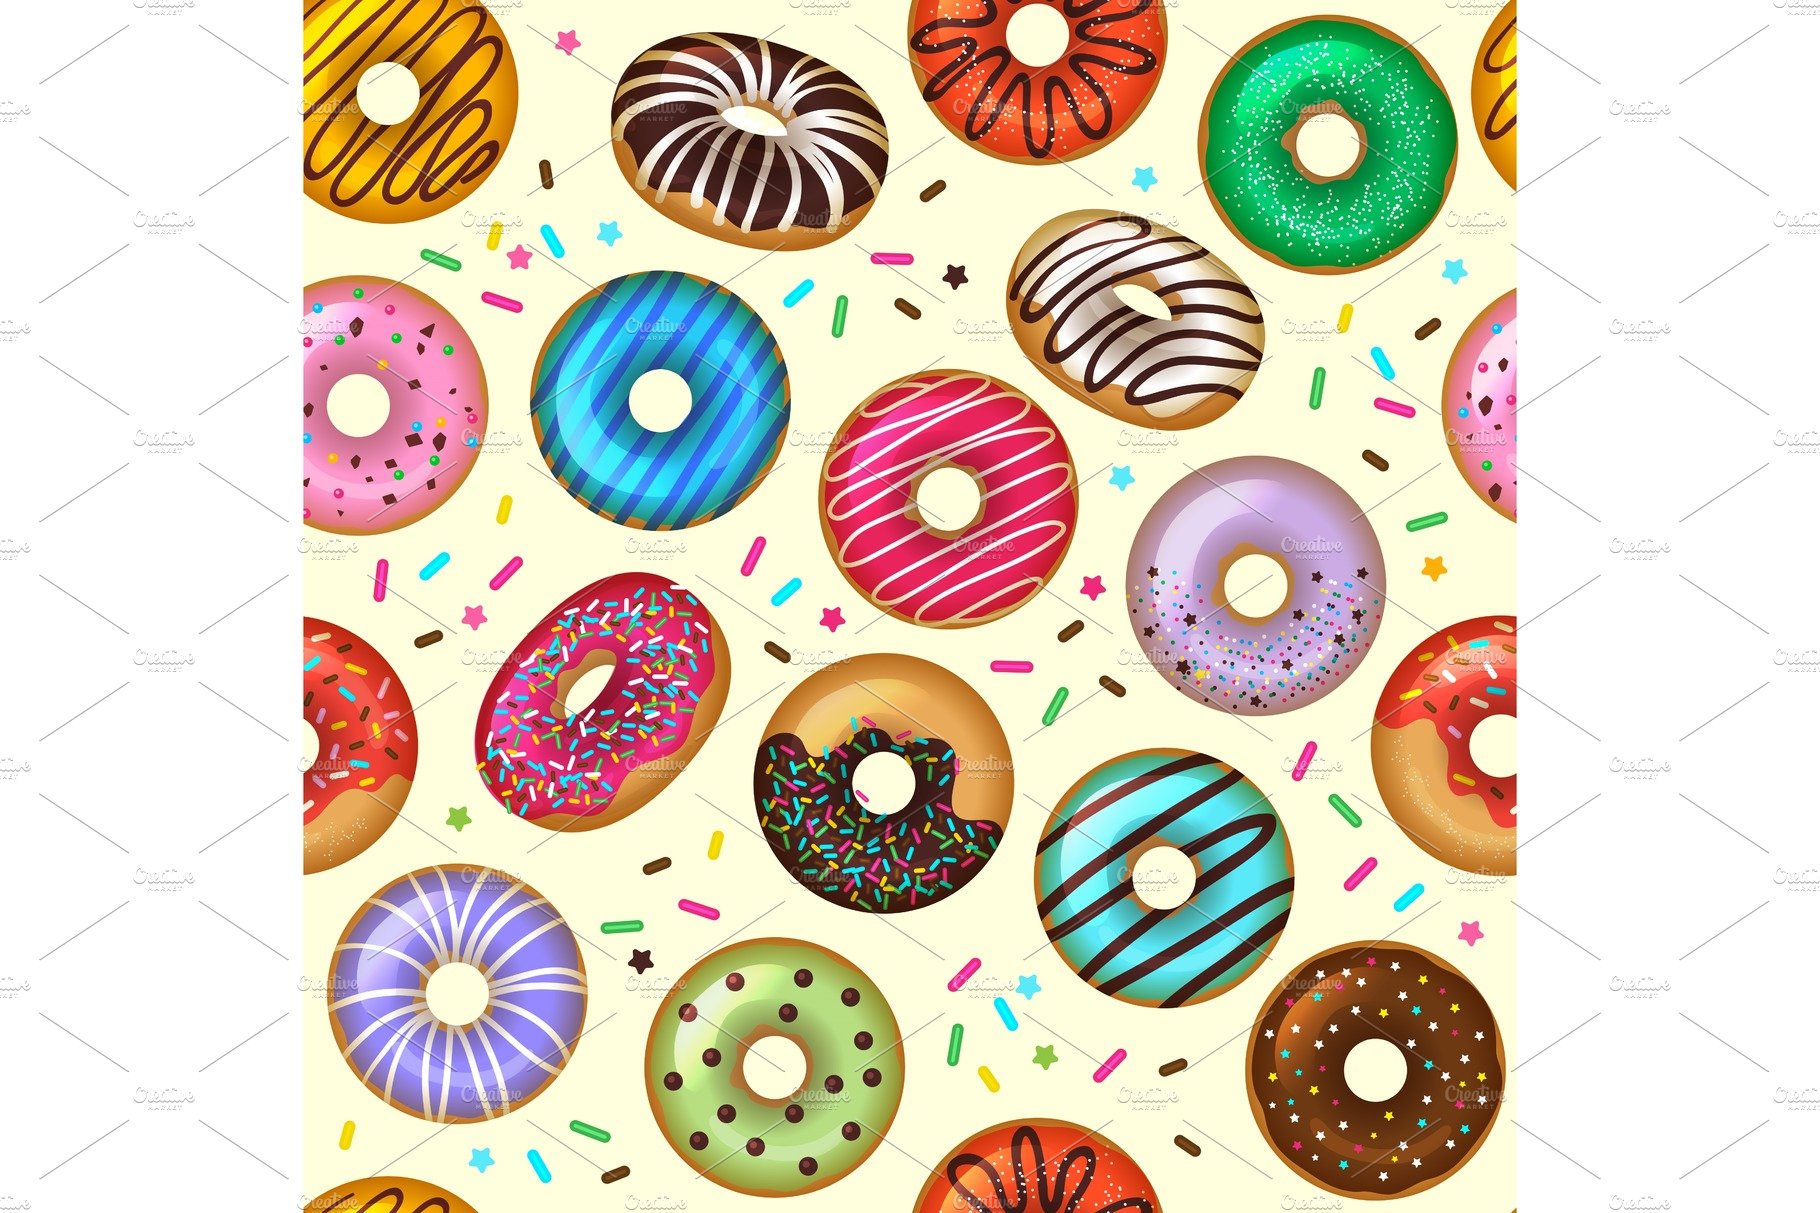 Donuts pattern. Tasty bakery dessert cover image.